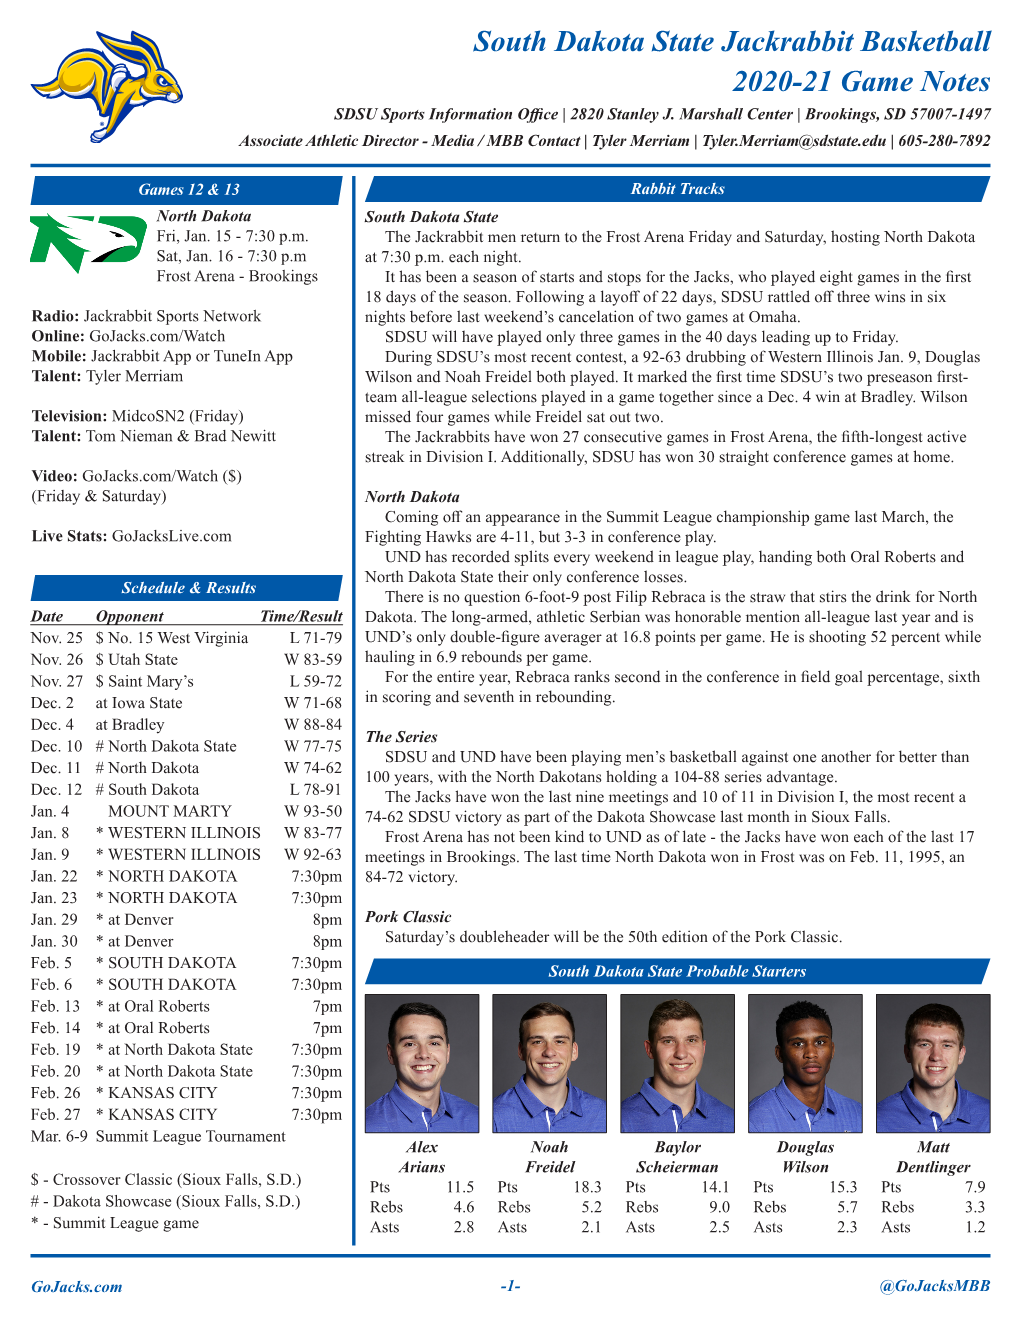 South Dakota State Jackrabbit Basketball 2020-21 Game Notes SDSU Sports Information Office | 2820 Stanley J